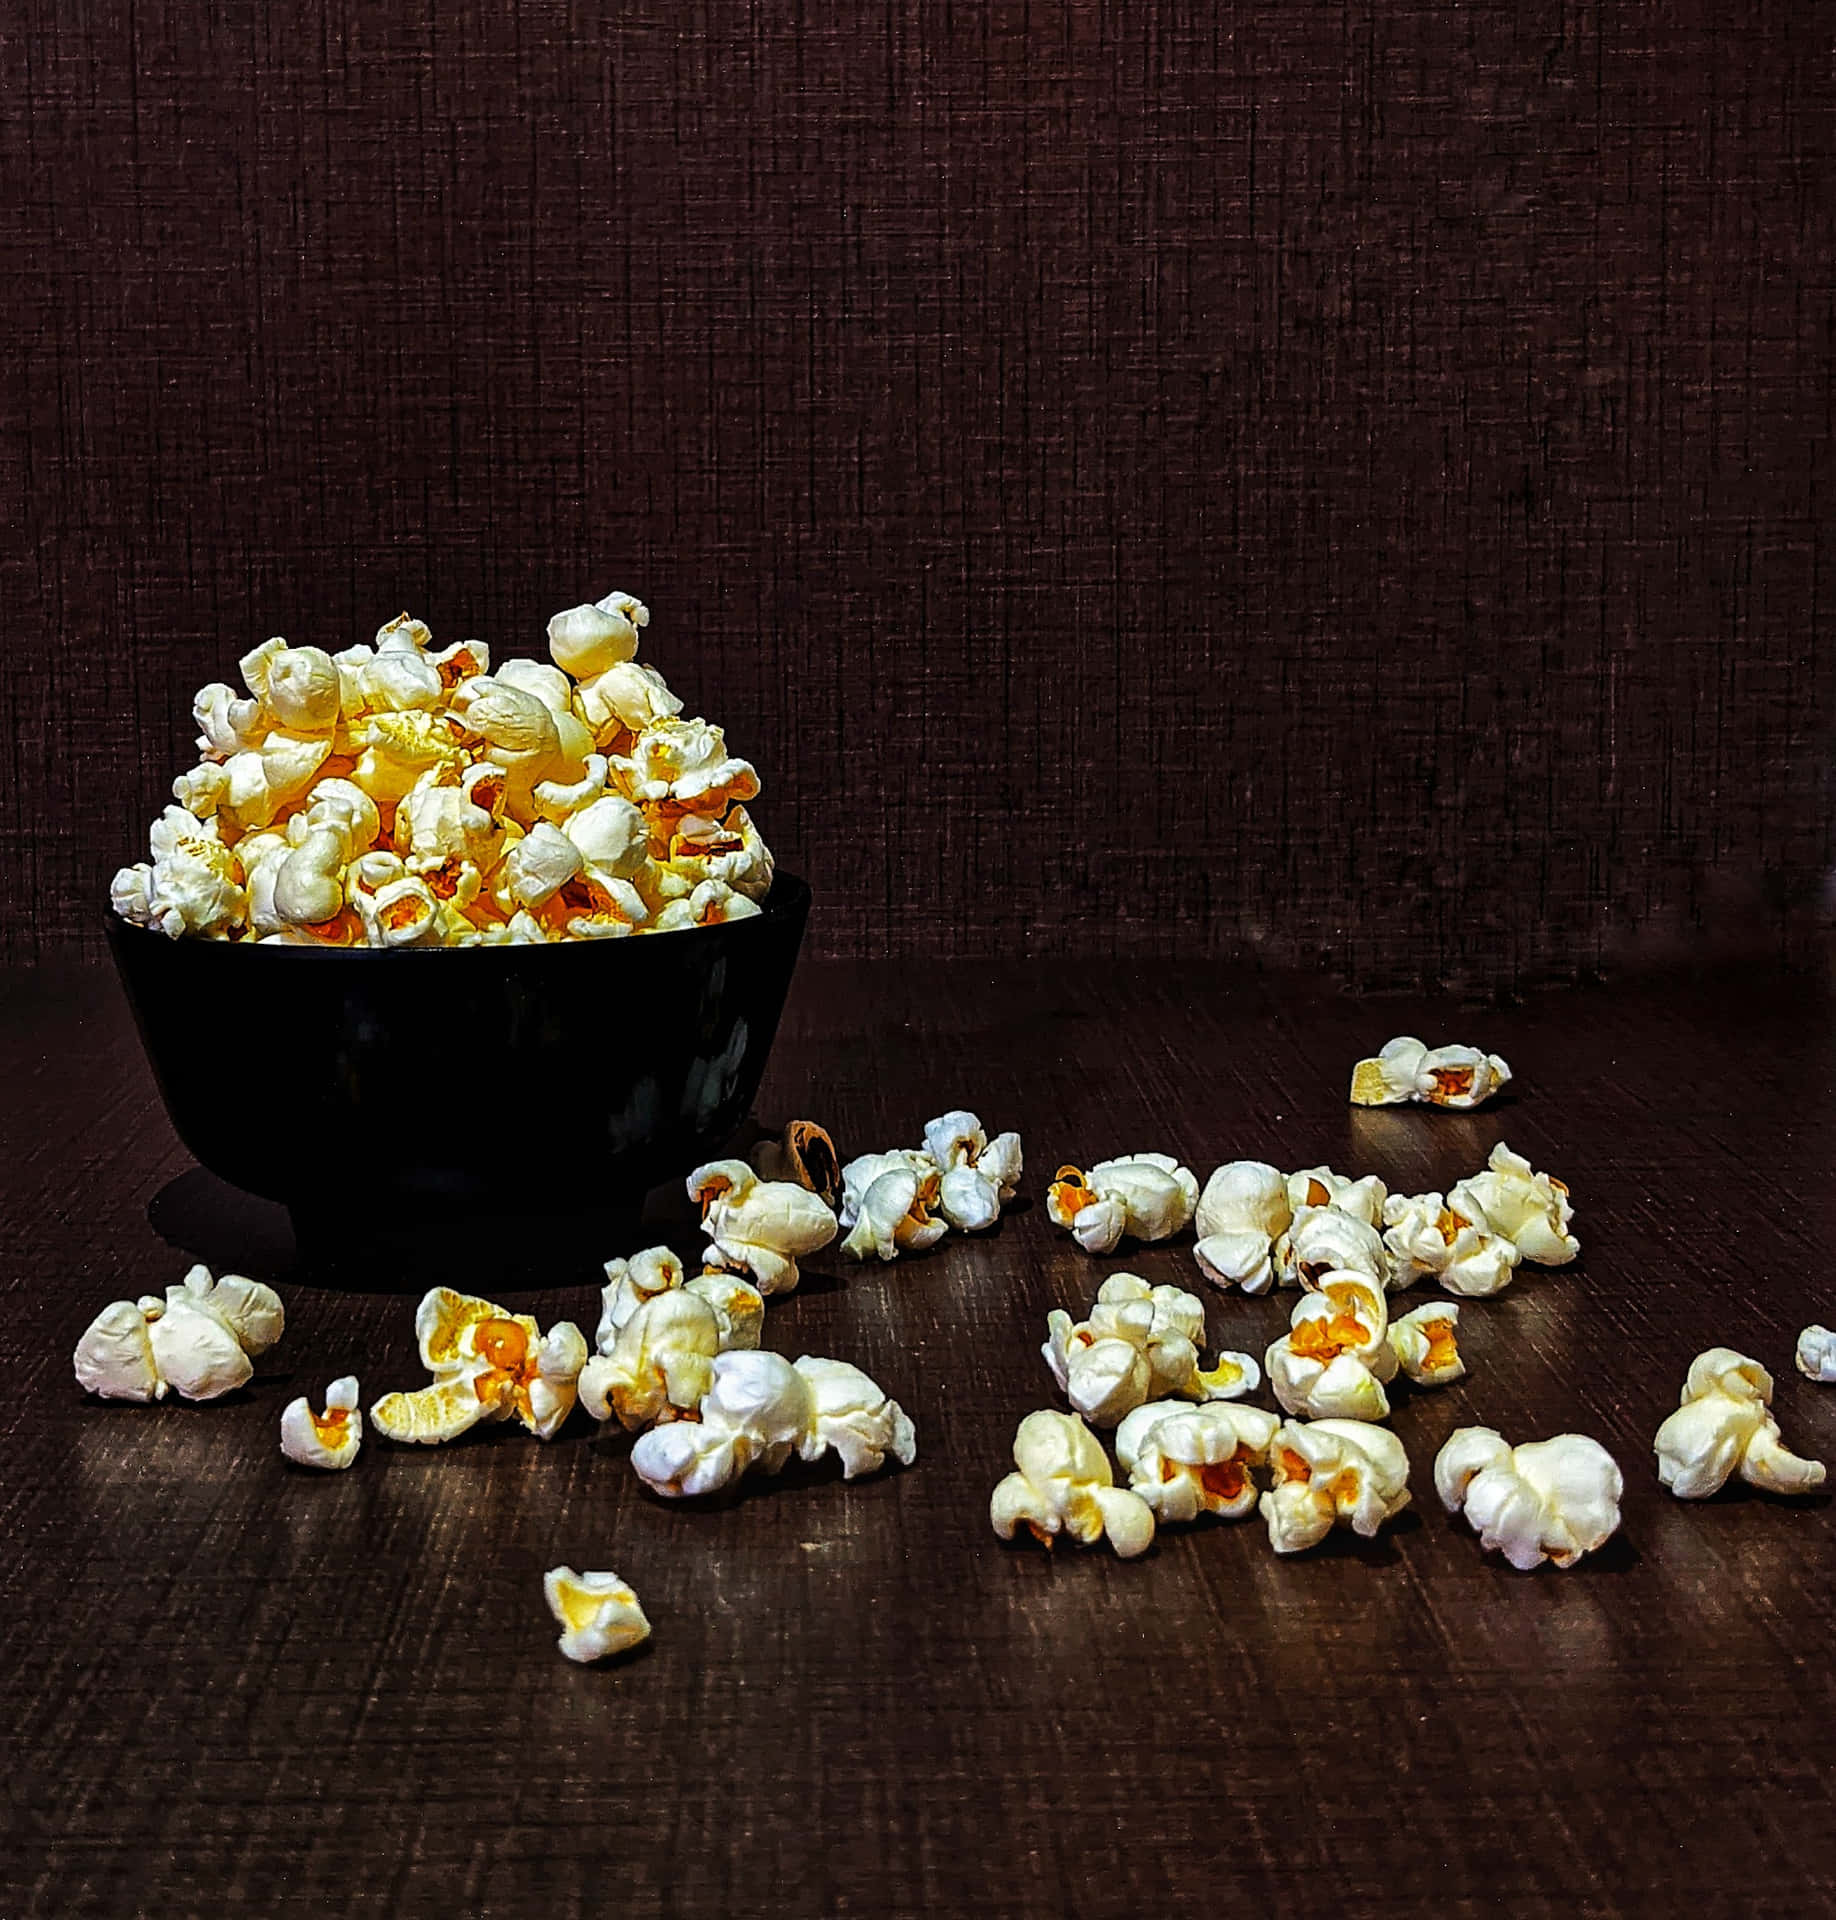 A Bowl Of Popcorn